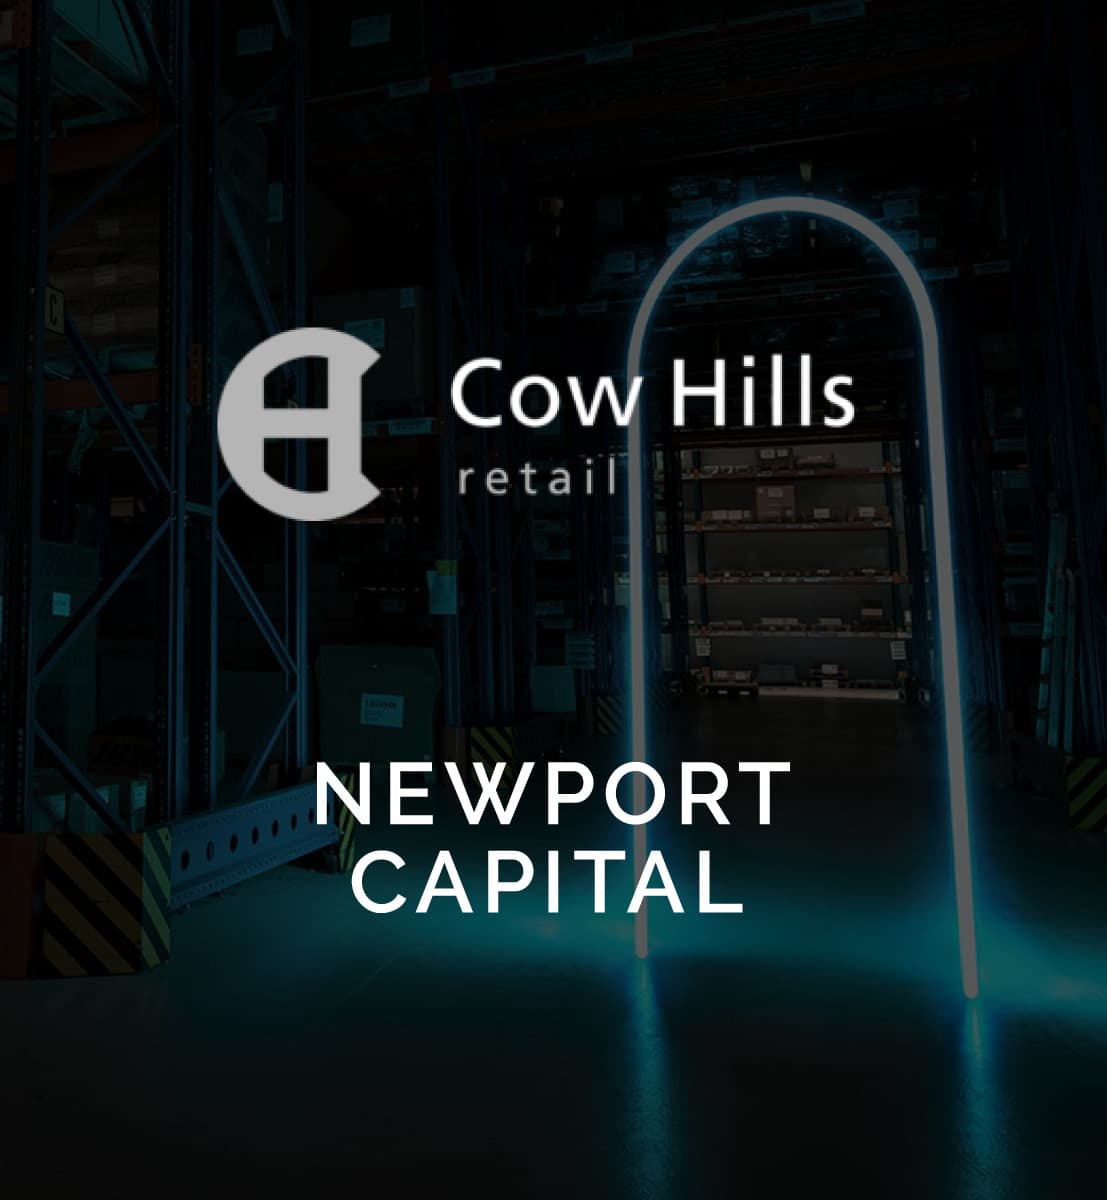 DEX international M&A advised Cow Hills on sale to NewPort Capital